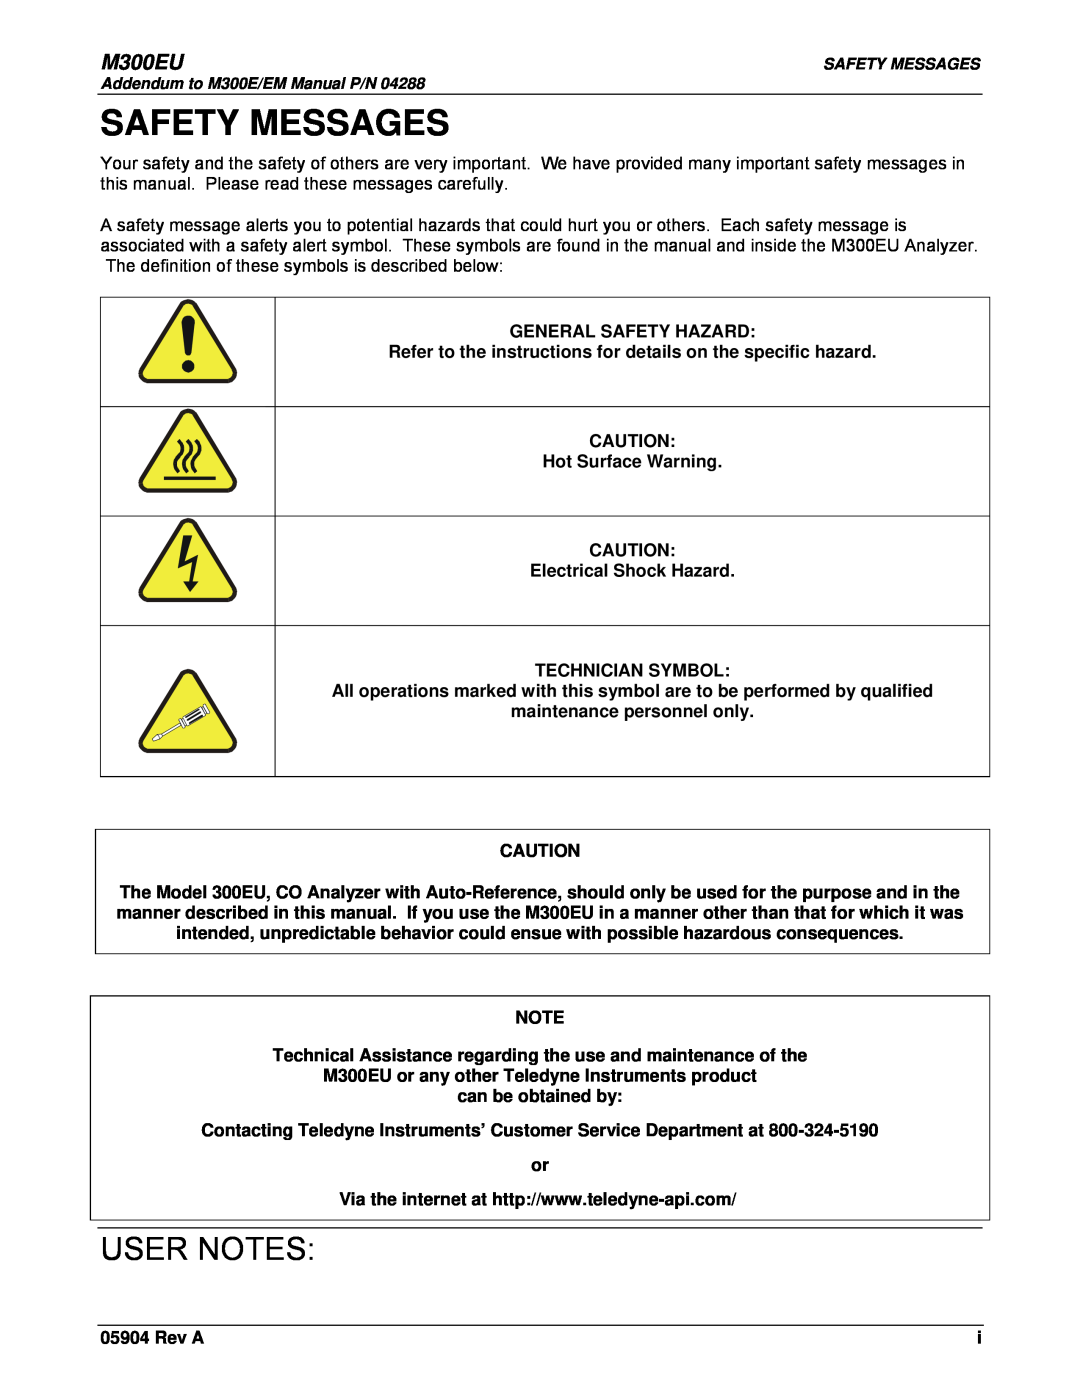 Teledyne Model 300EU manual Safety Messages, User Notes, M300EU, General Safety Hazard, Hot Surface Warning, Rev A 